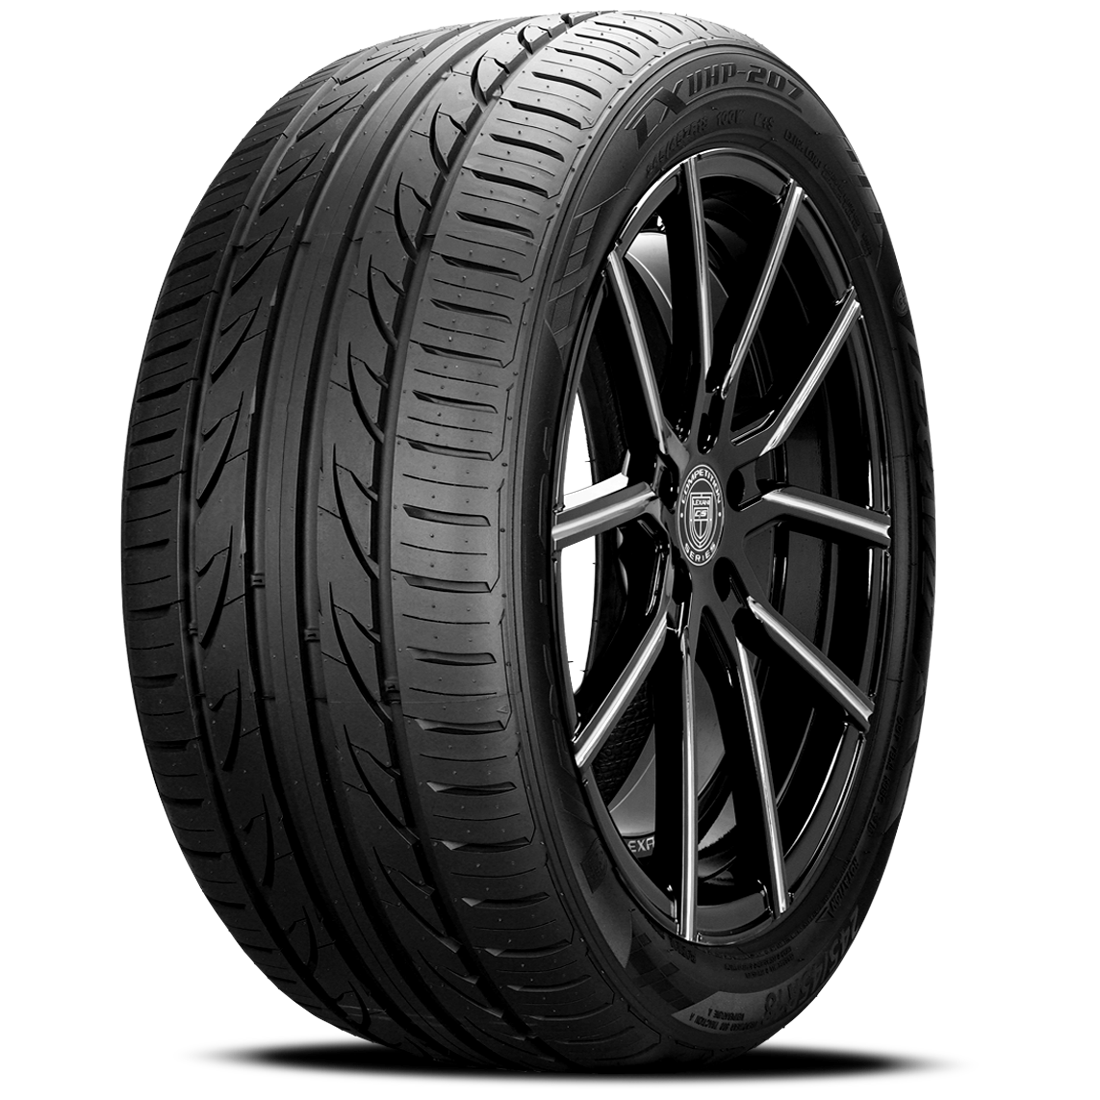 LEXANI LXUHP-207 205/40ZR17 (23.5X8.1R 17) Tires